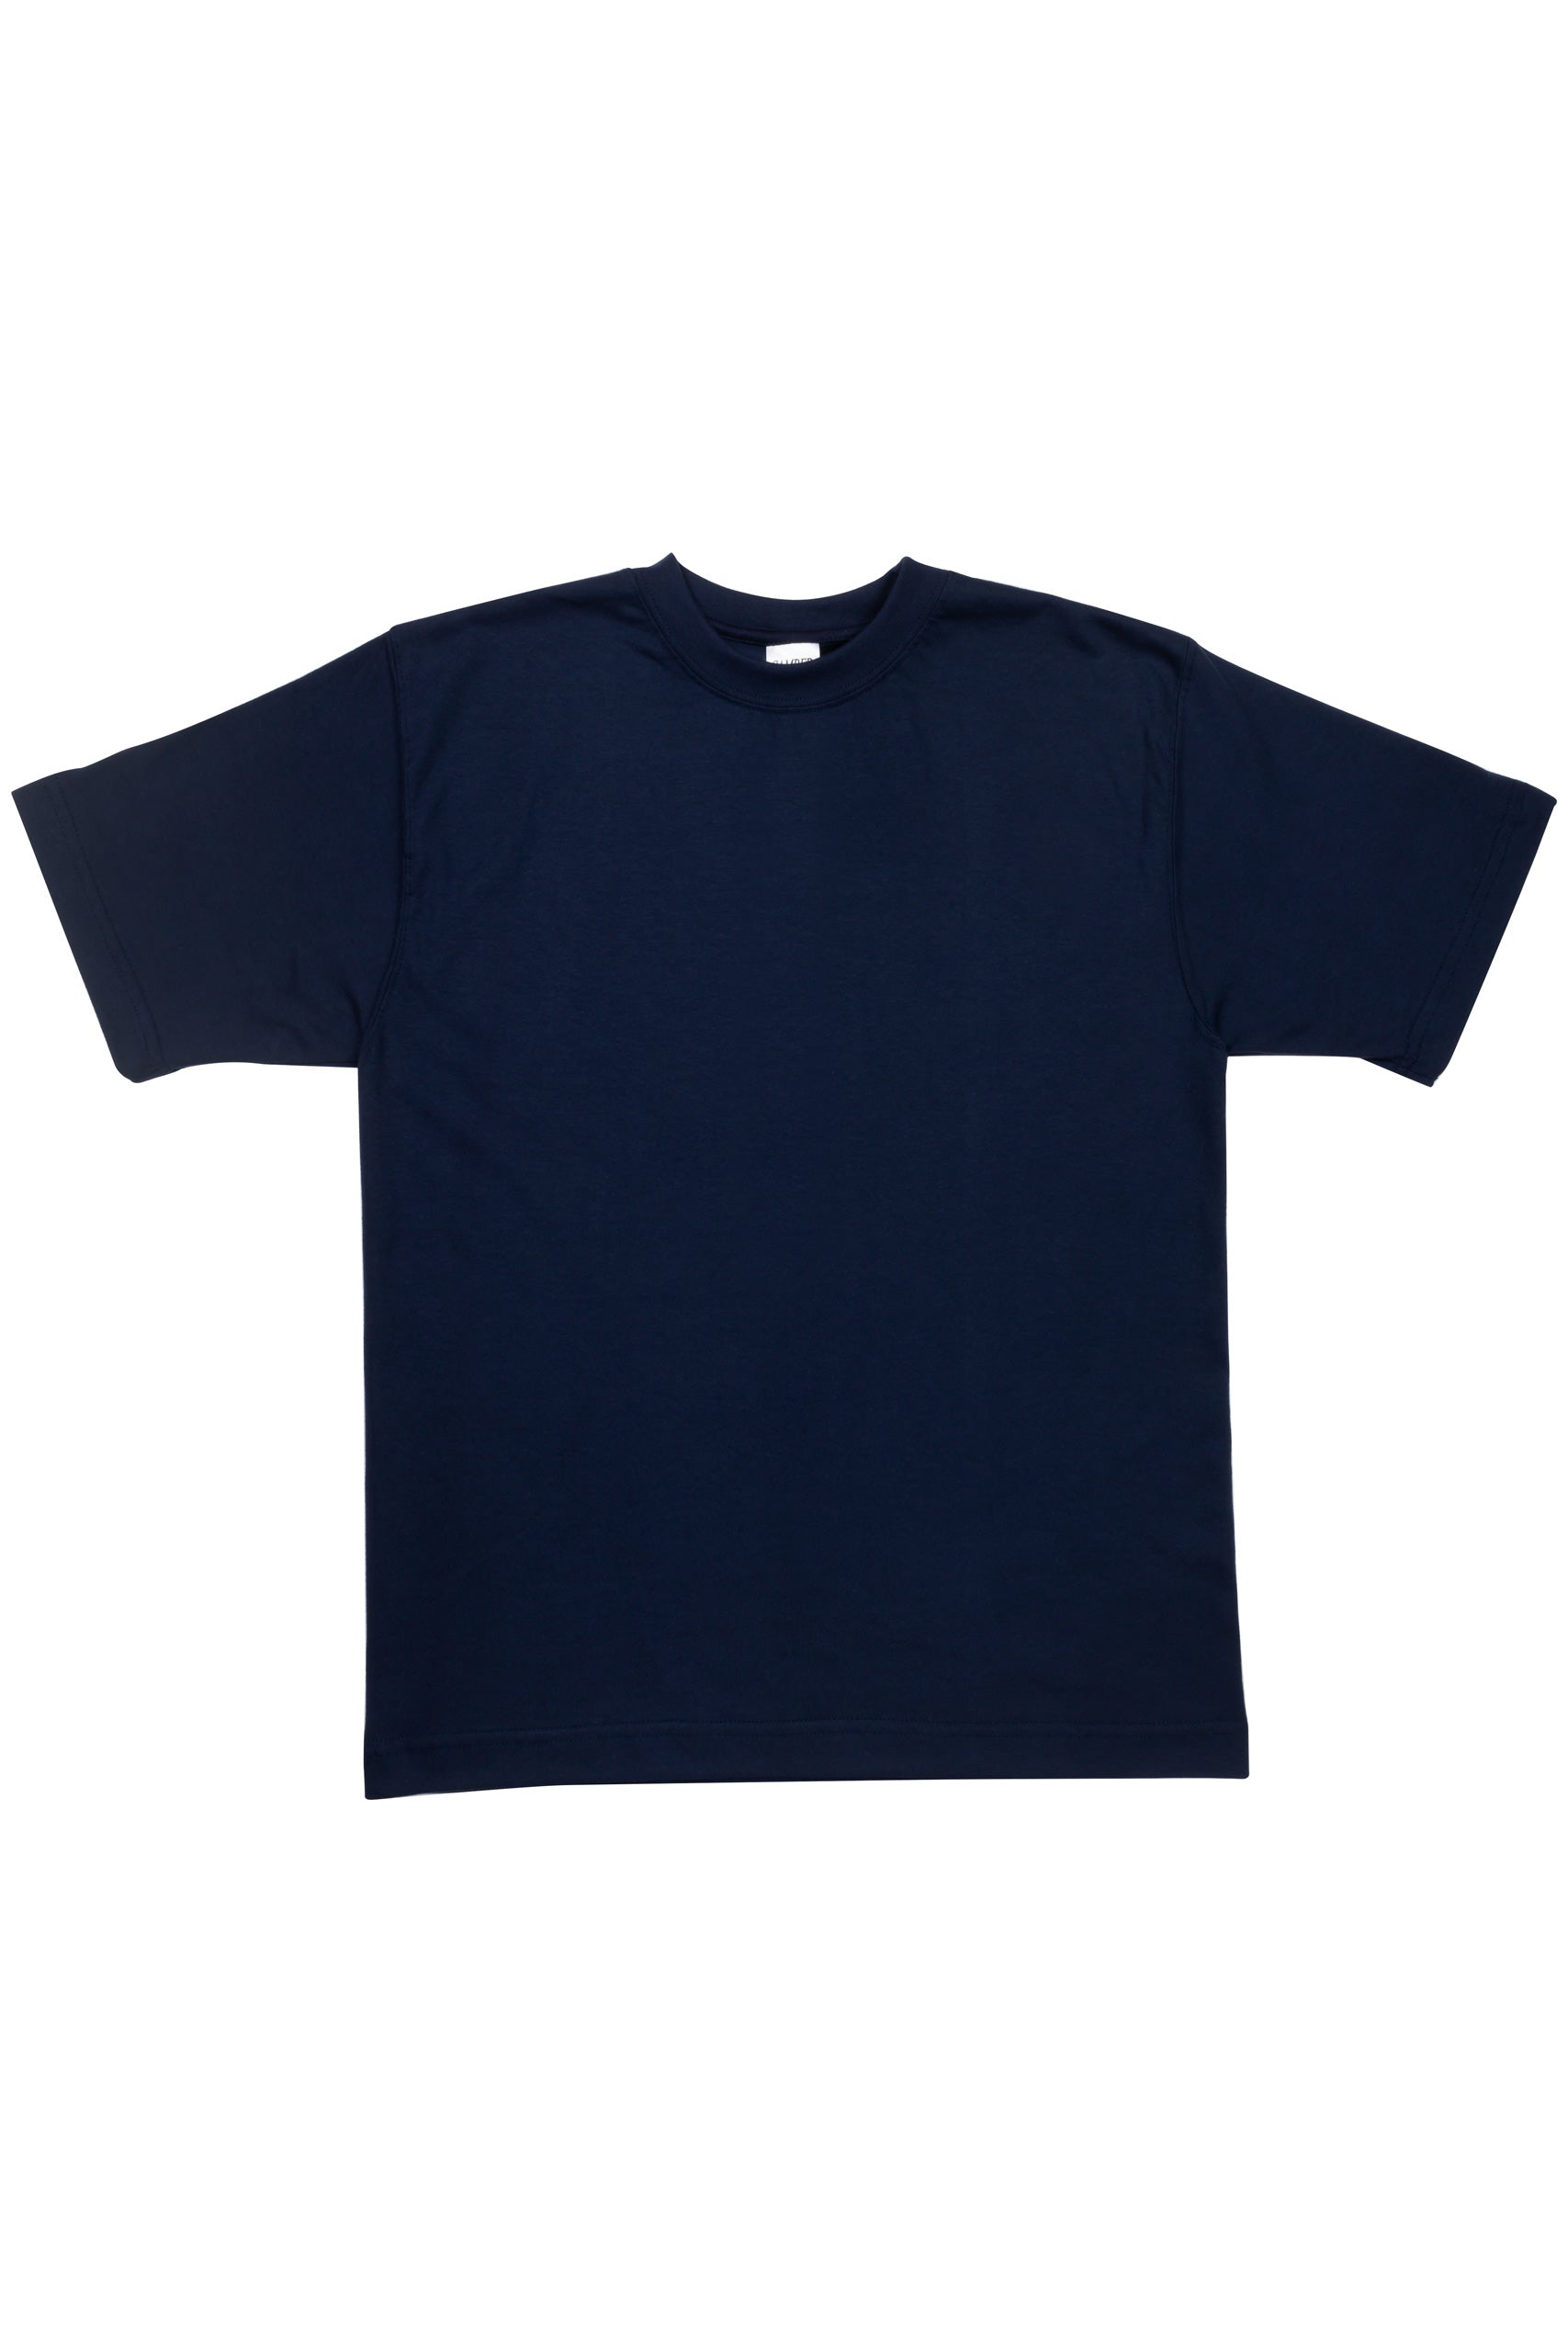 Camber USA Navy 701 T-Shirt 6oz – Clothiers Embark